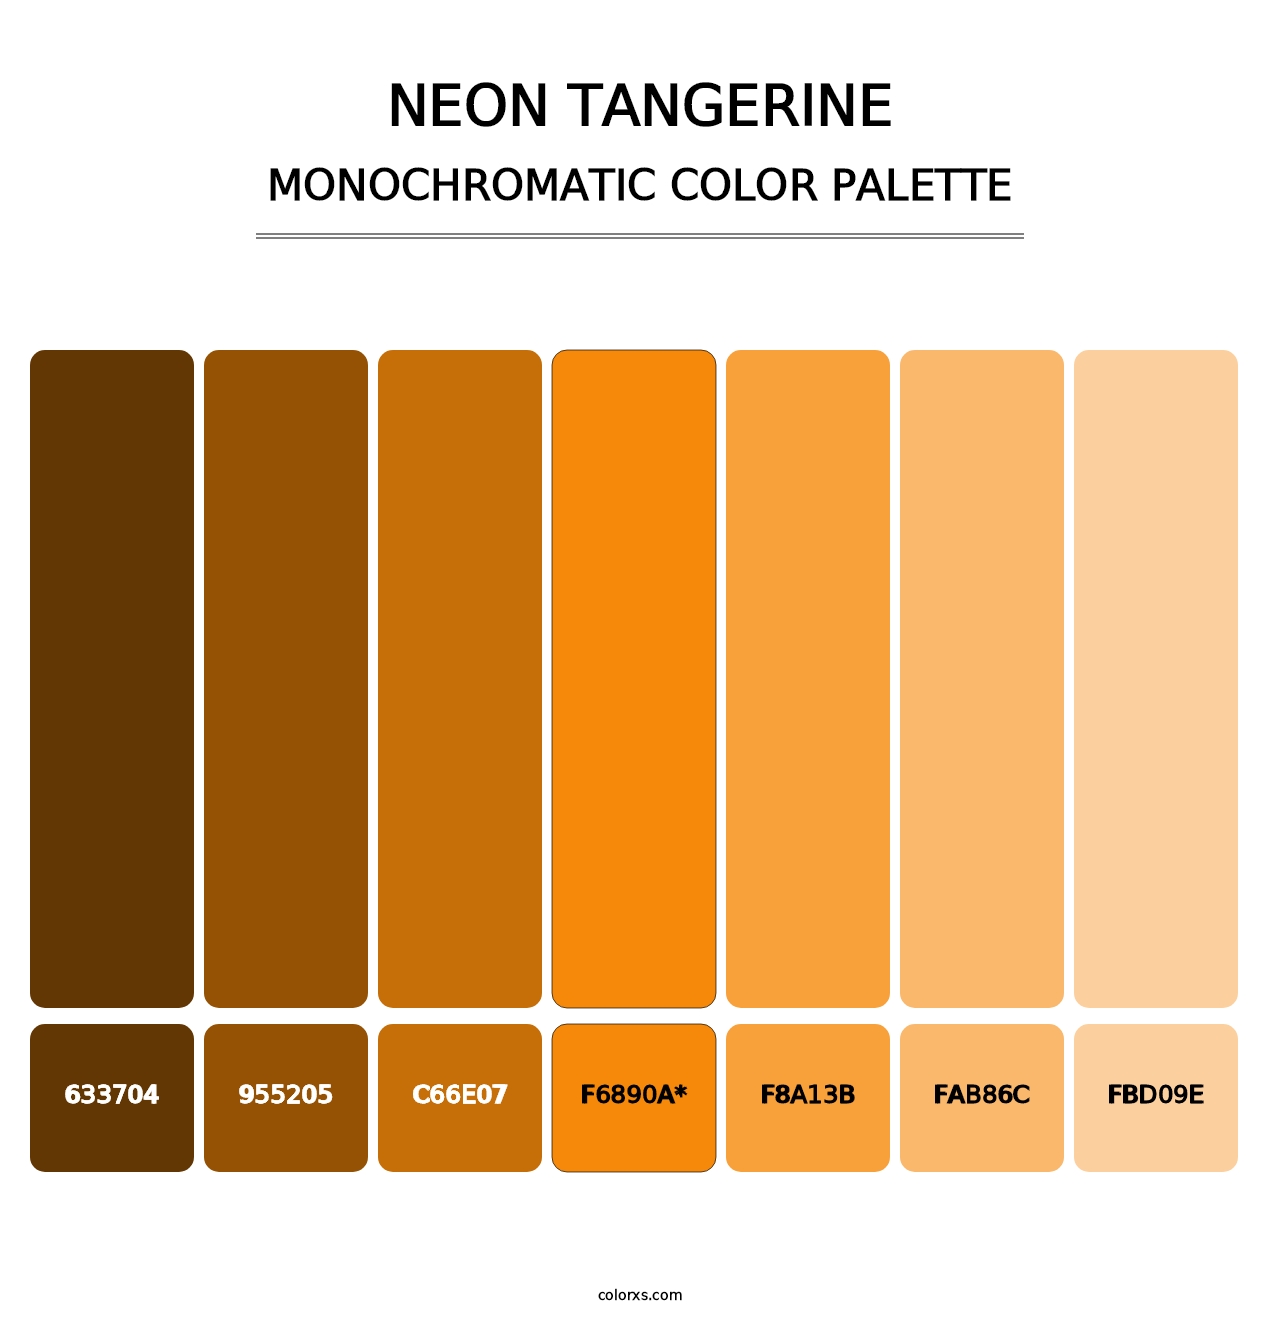 Neon Tangerine - Monochromatic Color Palette